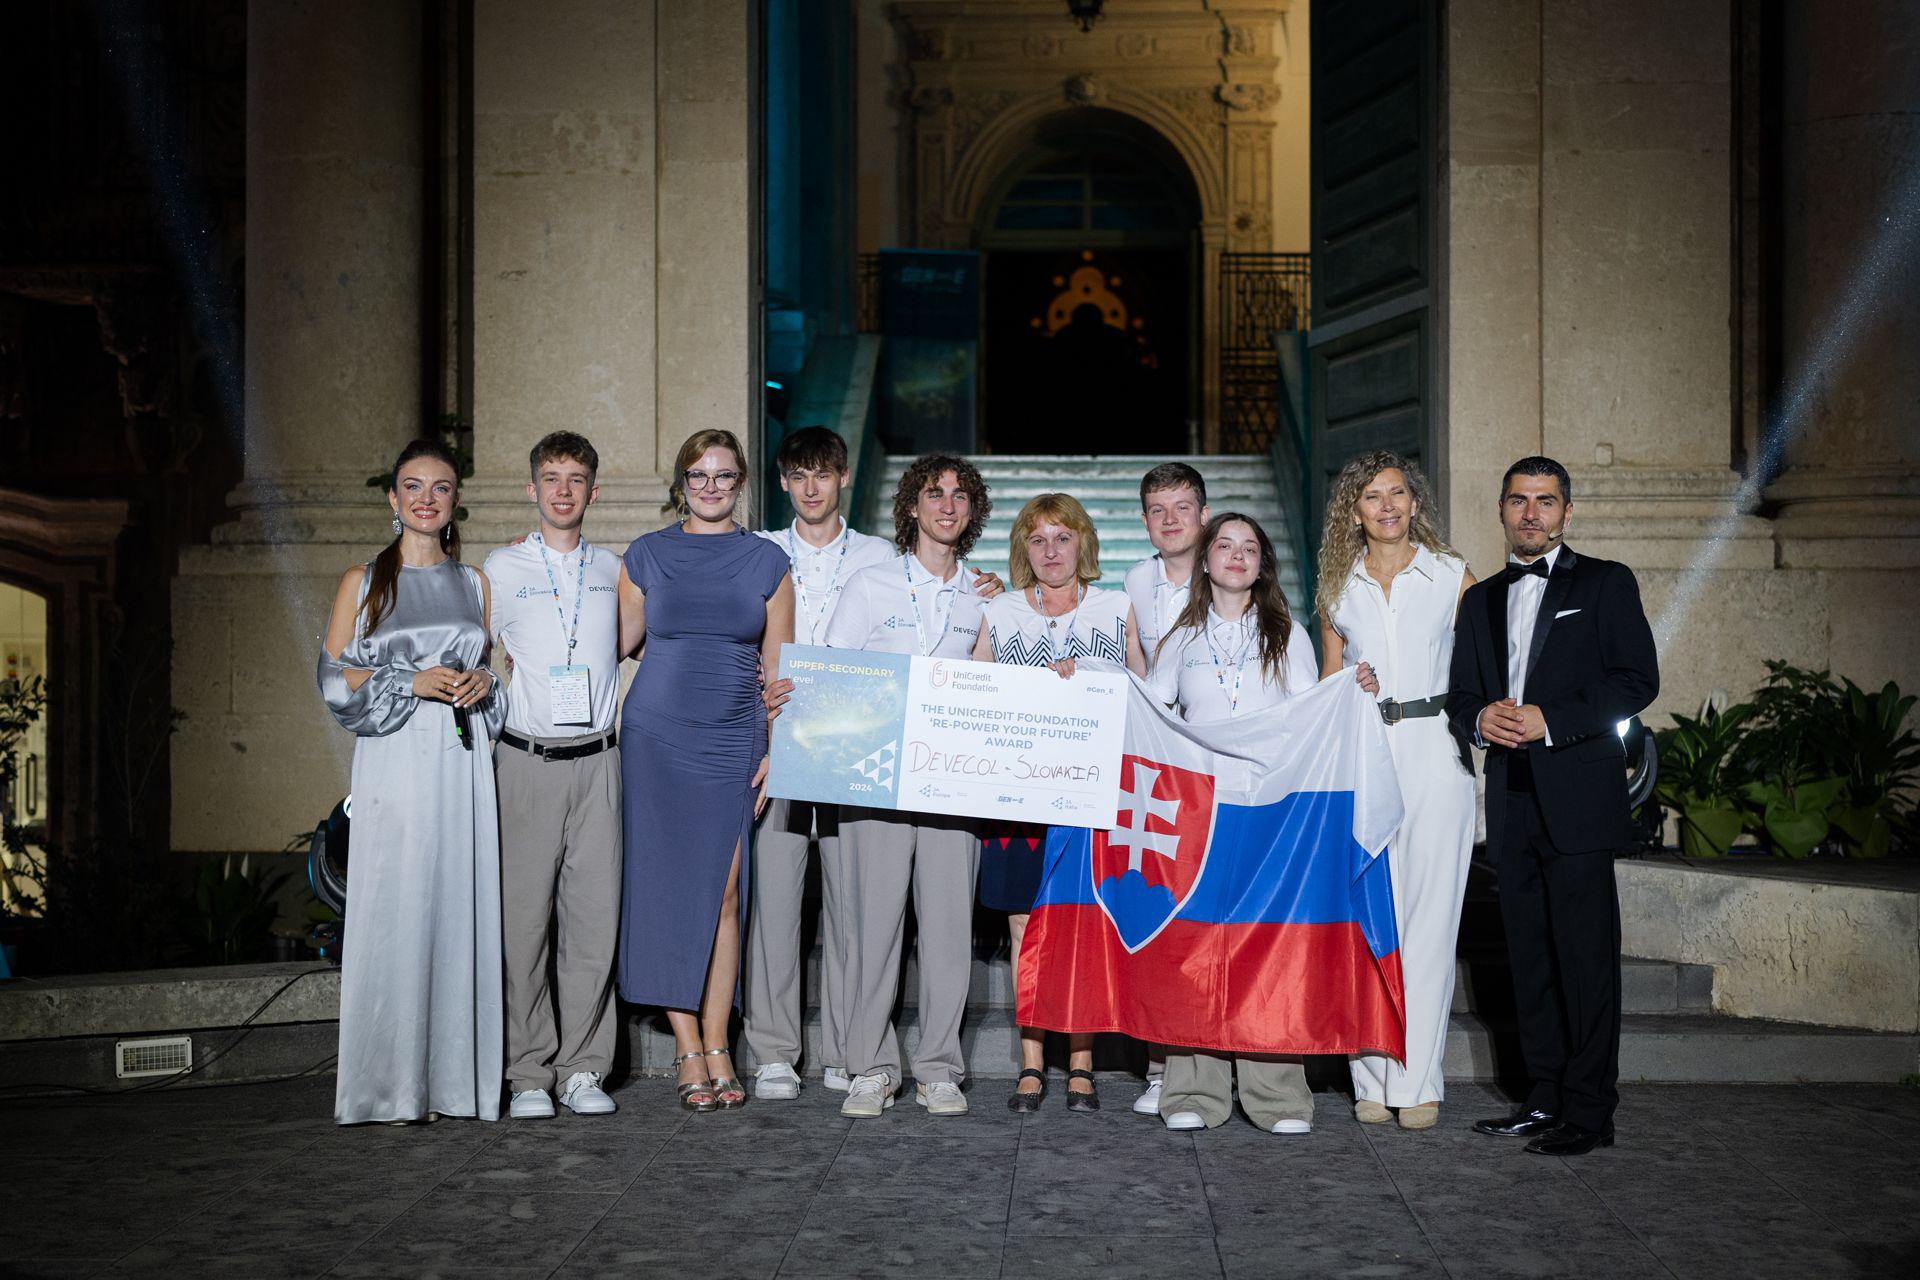 UniCredit foundation - giovane team Devecol vince premio Re-power your future